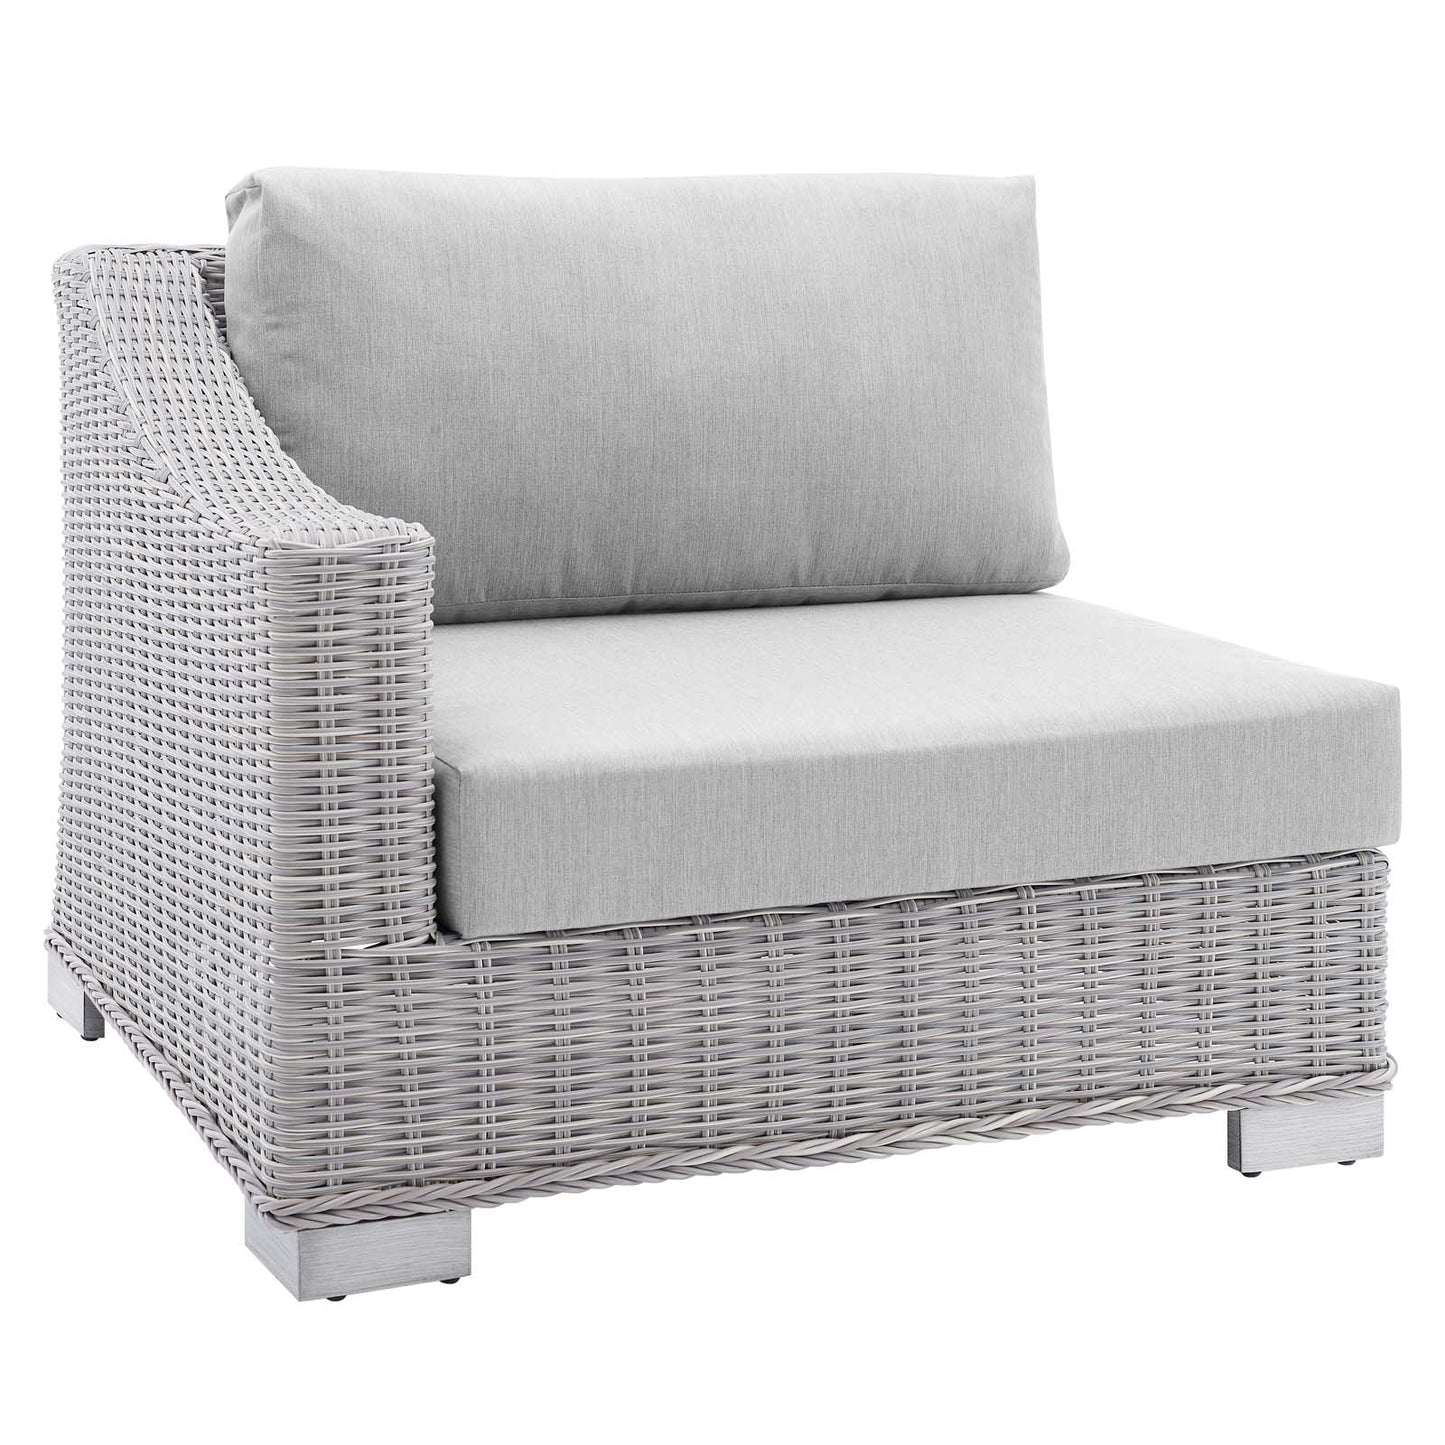 Conway Sunbrella® Outdoor Patio Wicker Rattan 6-Piece Sectional Sofa Set Light Gray Gray EEI-4358-LGR-GRY